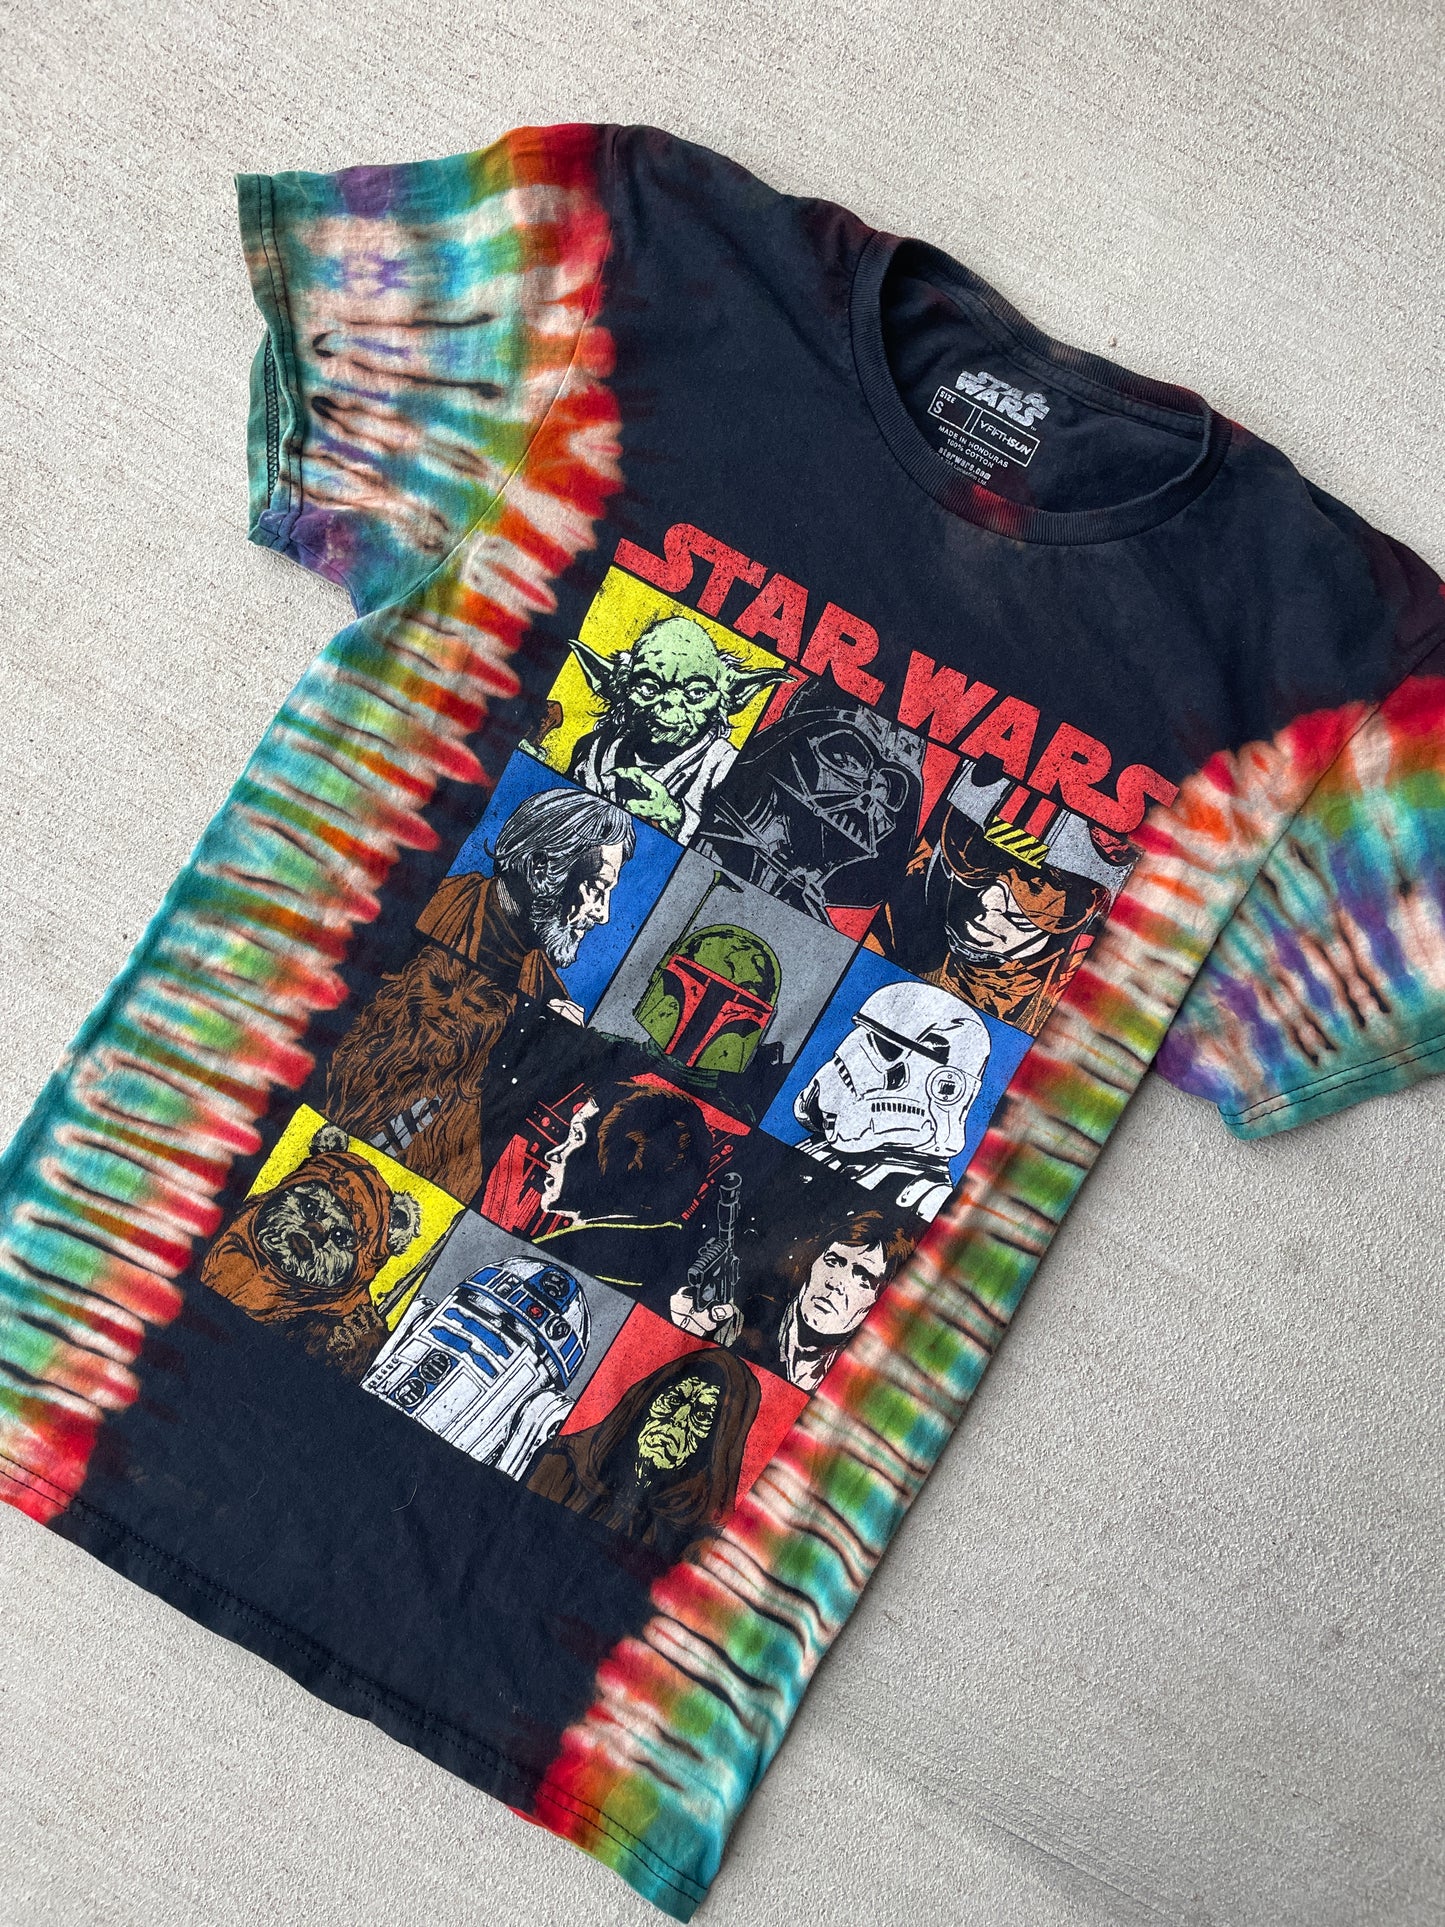 Large Men’s Star Wars Space Ship Handmade Tie Dye T-Shirt | Reverse Galaxy Tie Dye Short Sleeve